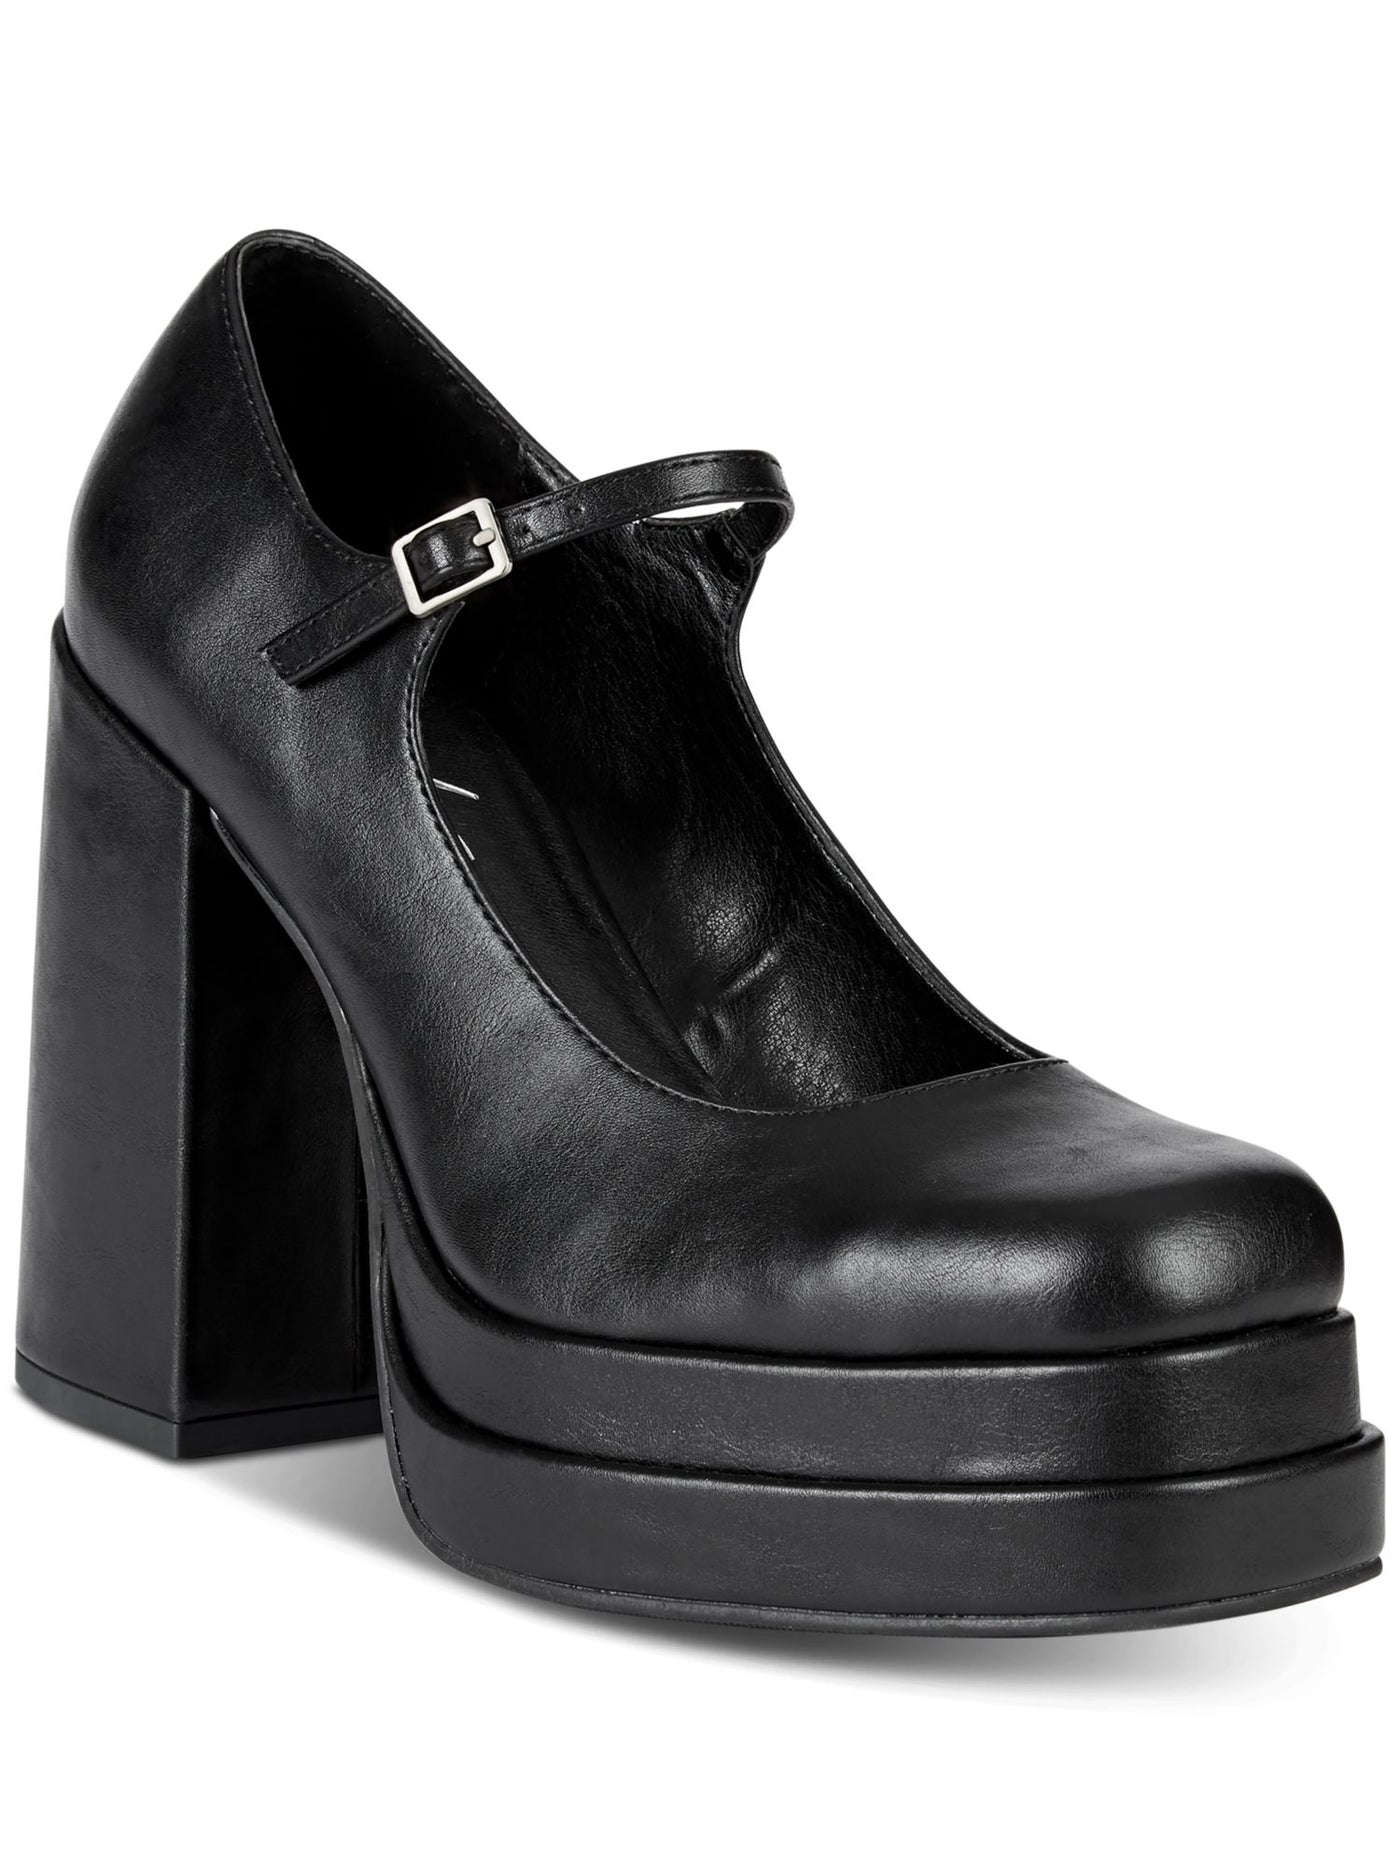 WILD PAIR Womens Black 1-1/2" Platform Cushioned Adjustable Ankle Strap Octavia Square Toe Block Heel Buckle Mary Jane 6.5 M